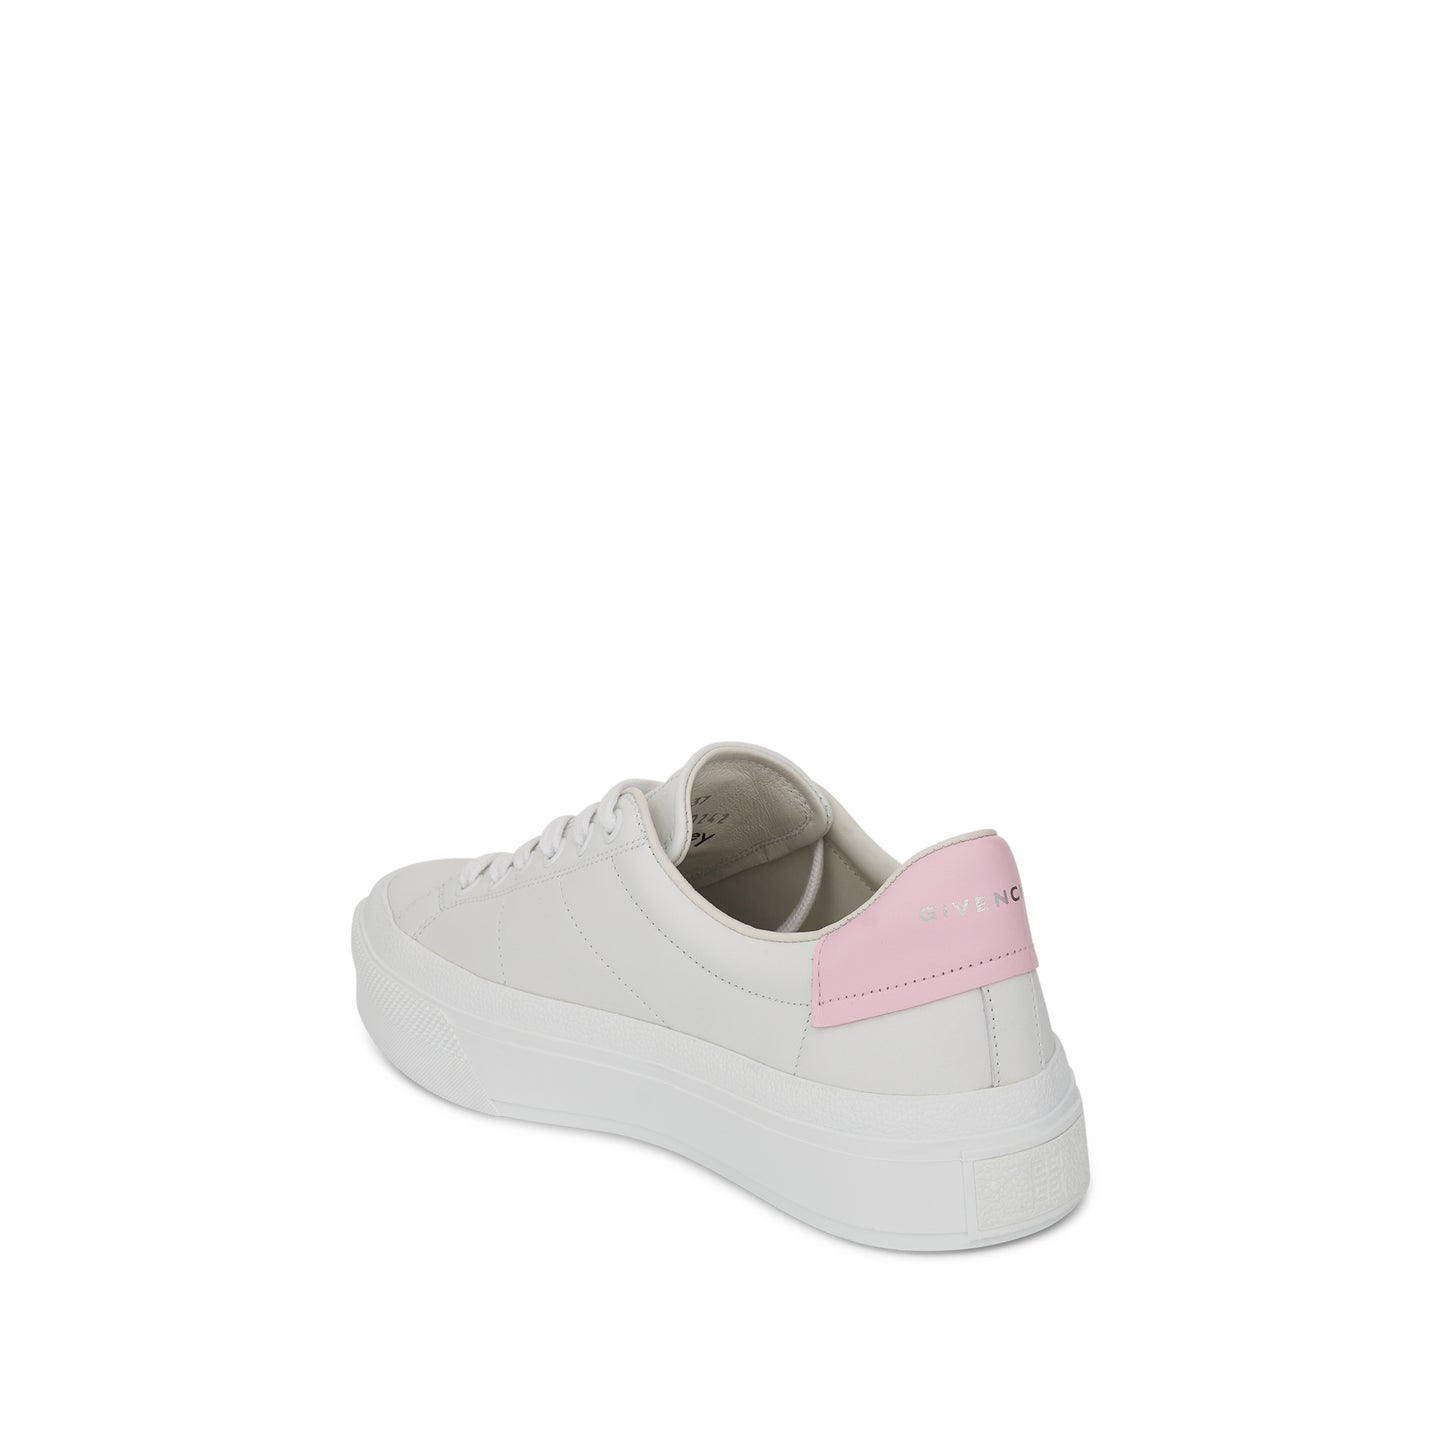 Disney 101 Dalmatians City Sport Sneaker in White/Pink